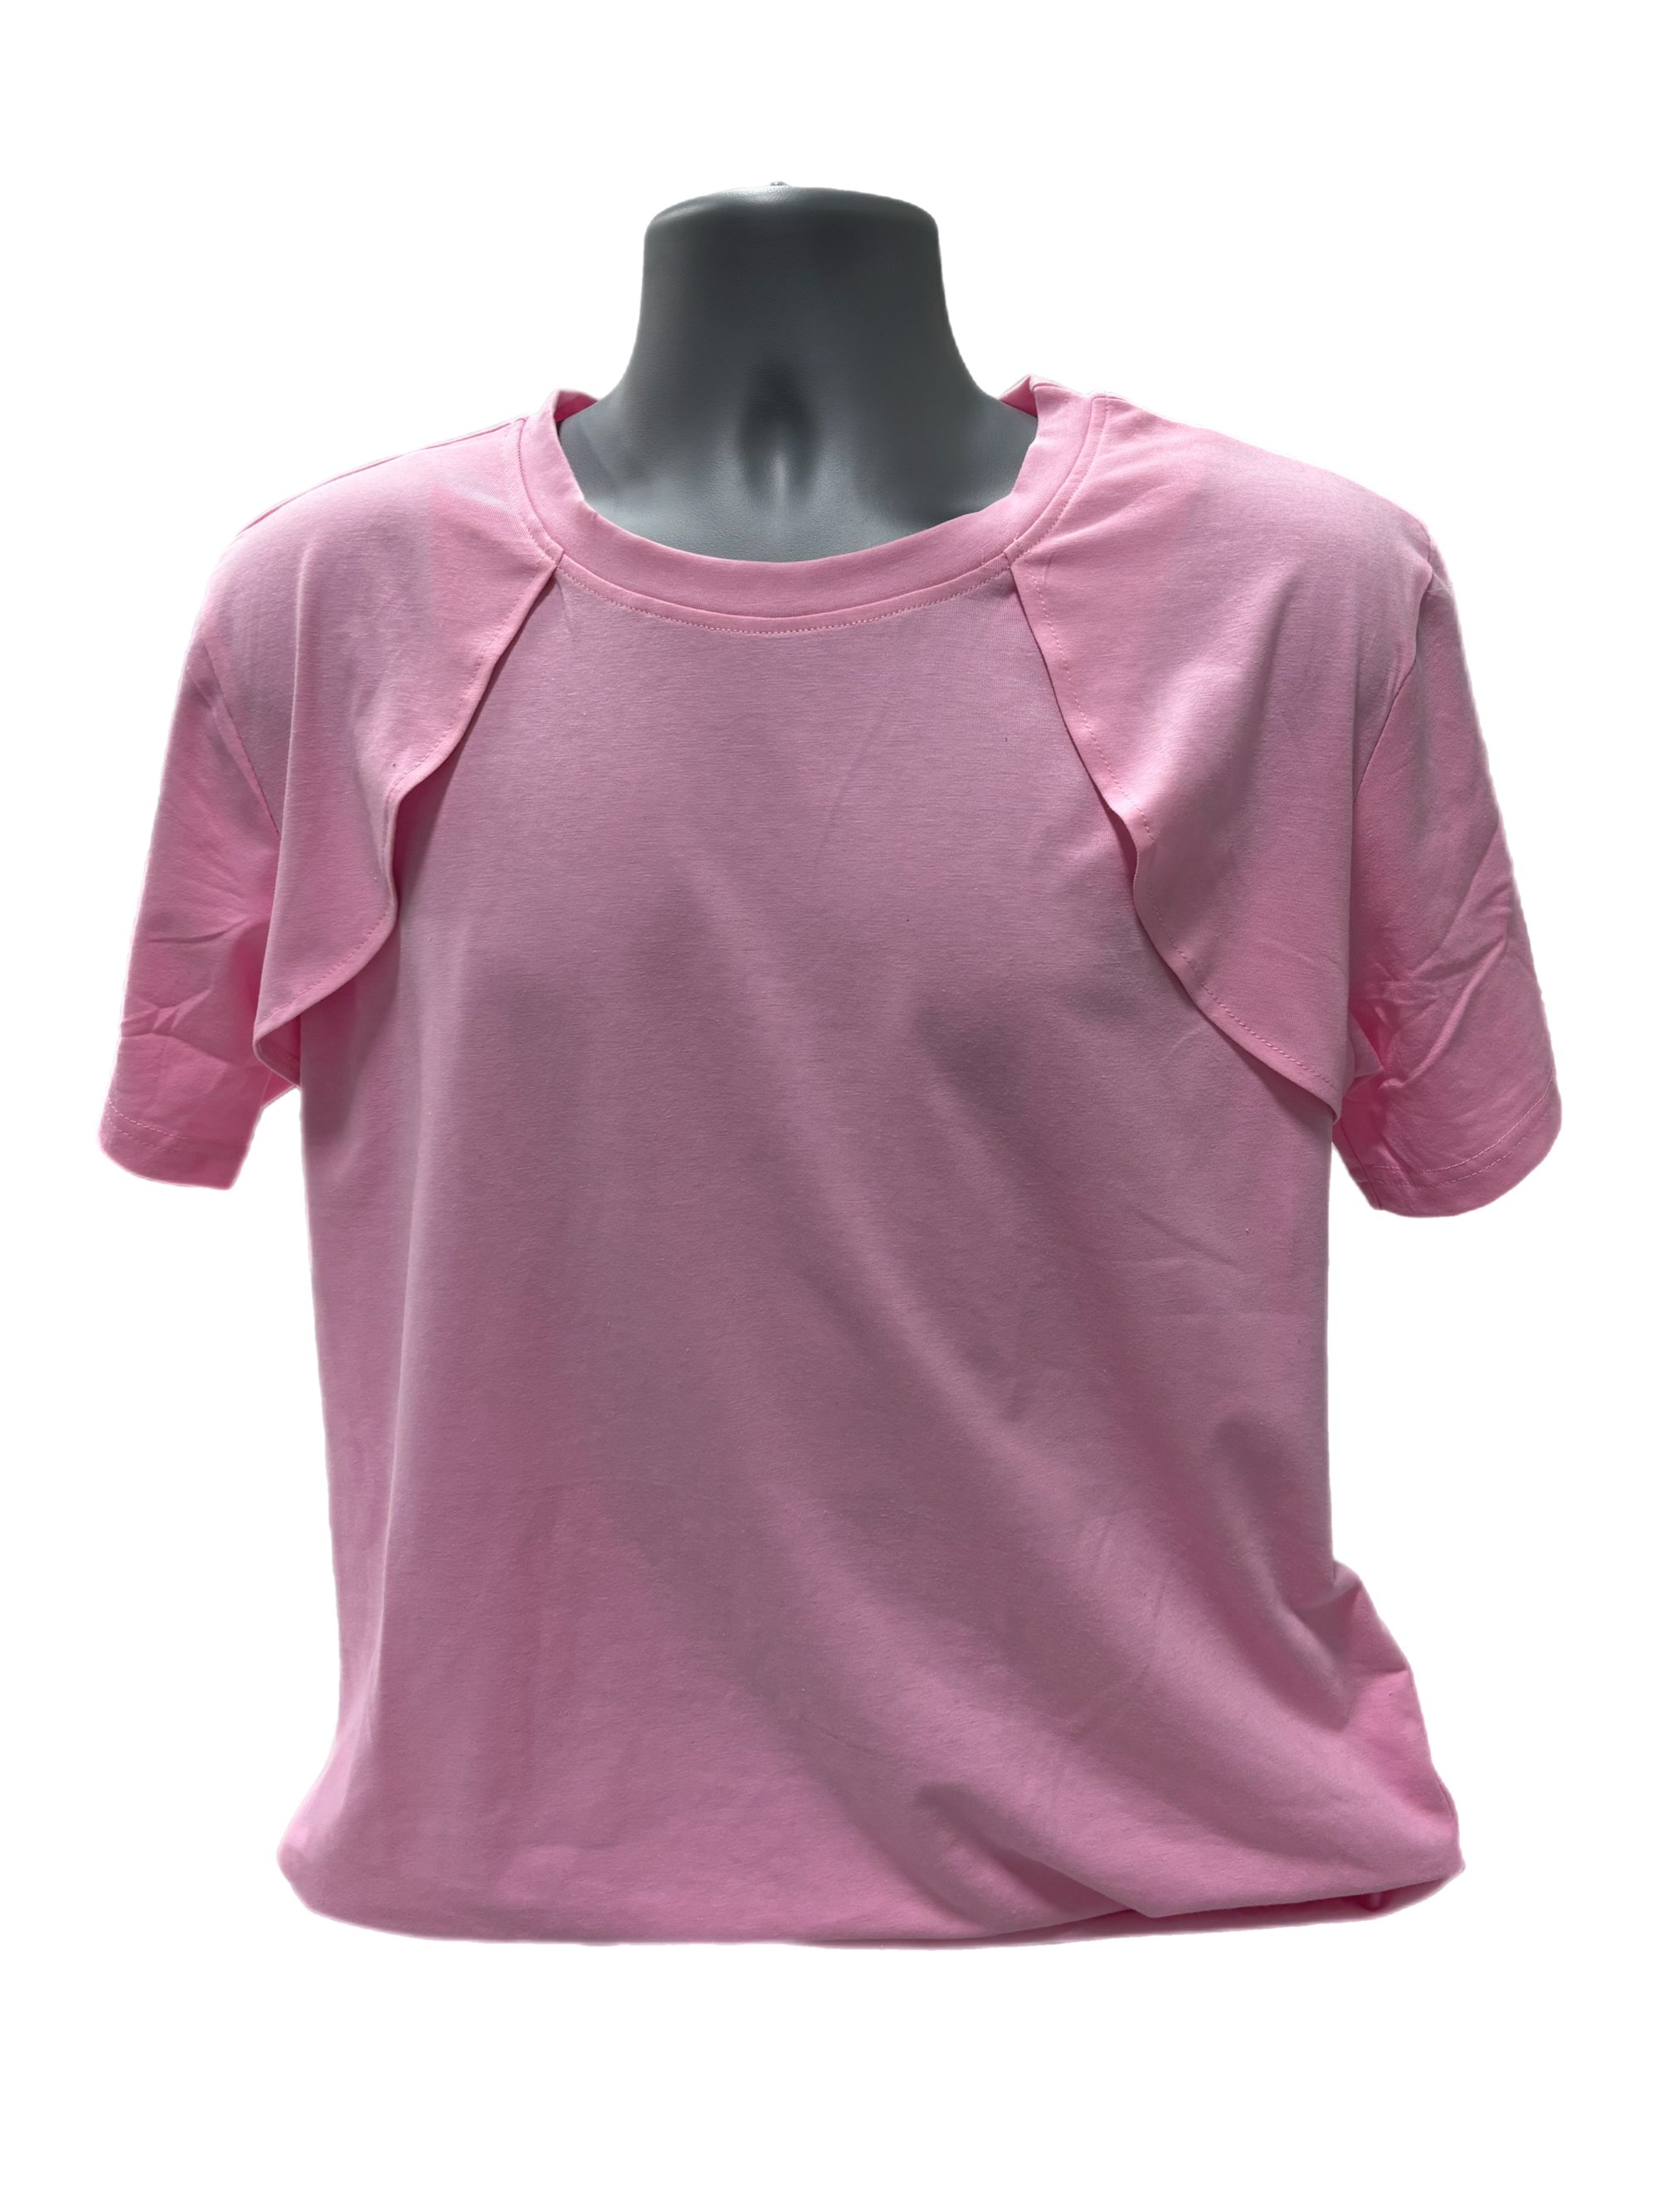 Premium OG Port Shirt-Pink